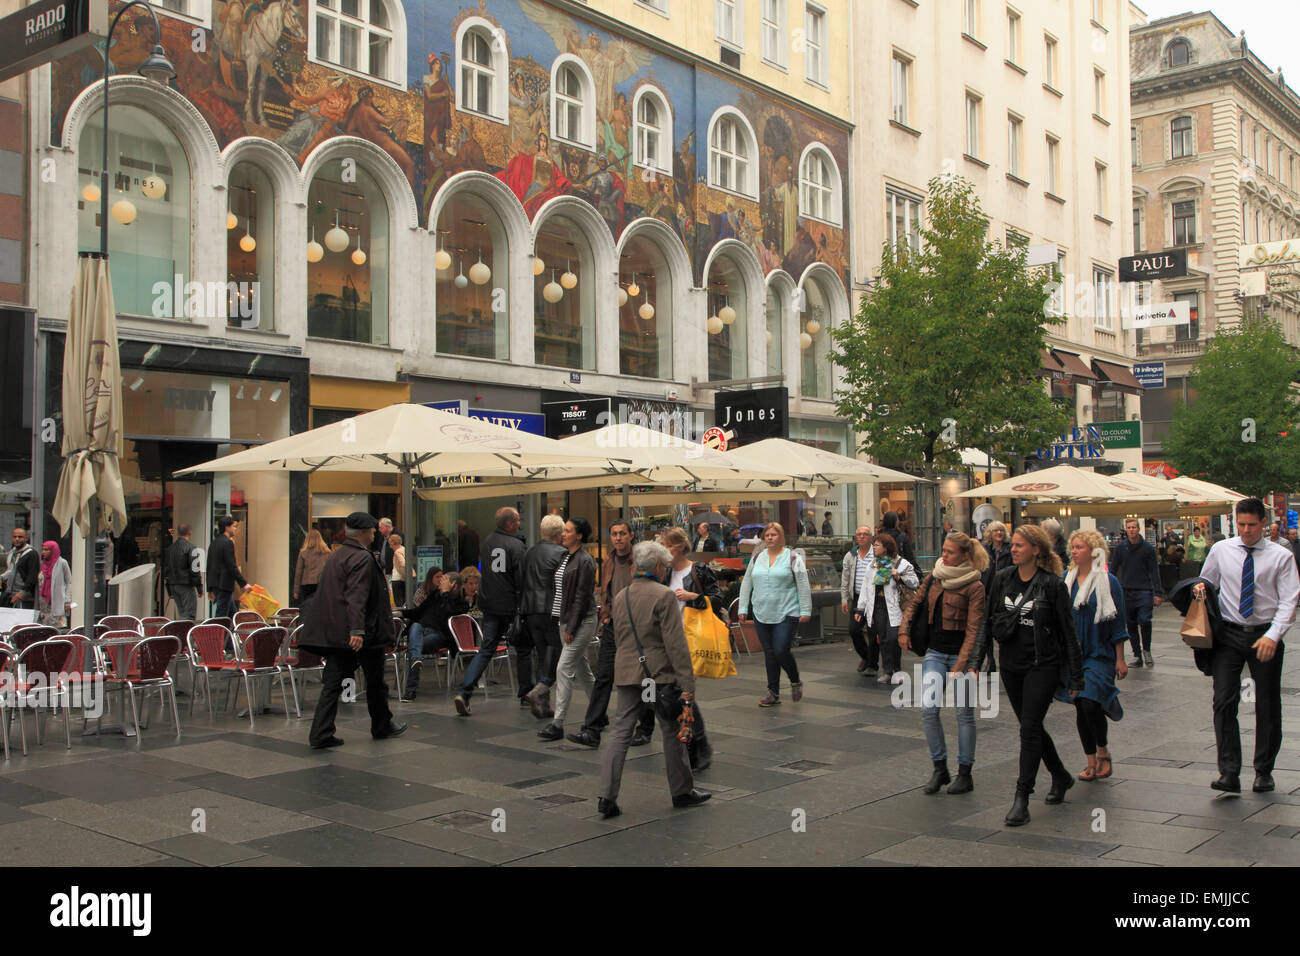 Austria Vienna Kärntner Strasse people shops cafes pedestrian street scene Stock Photo